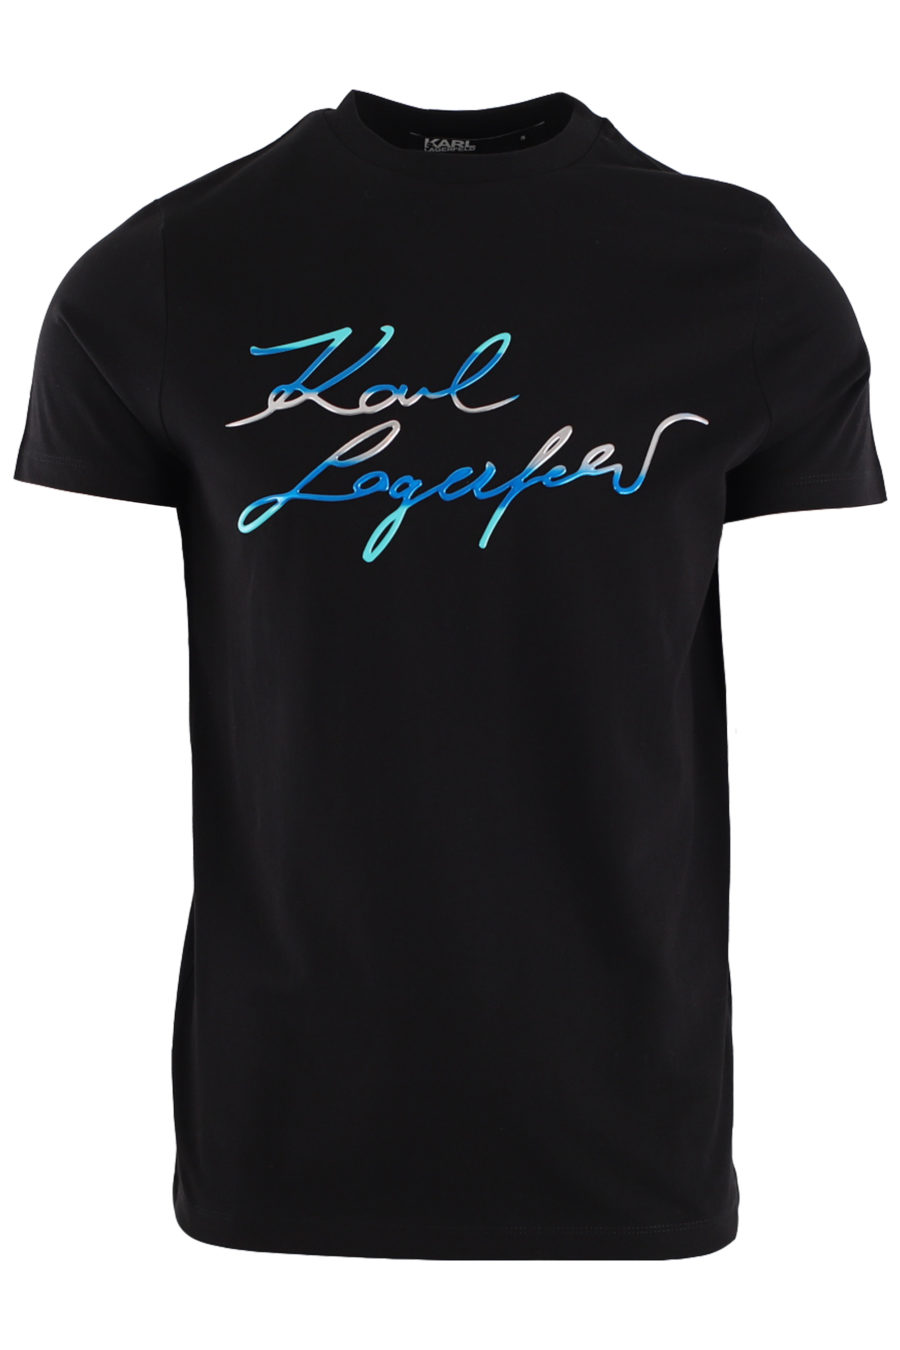 Camiseta negra con logo azul multicolor - IMG 8771